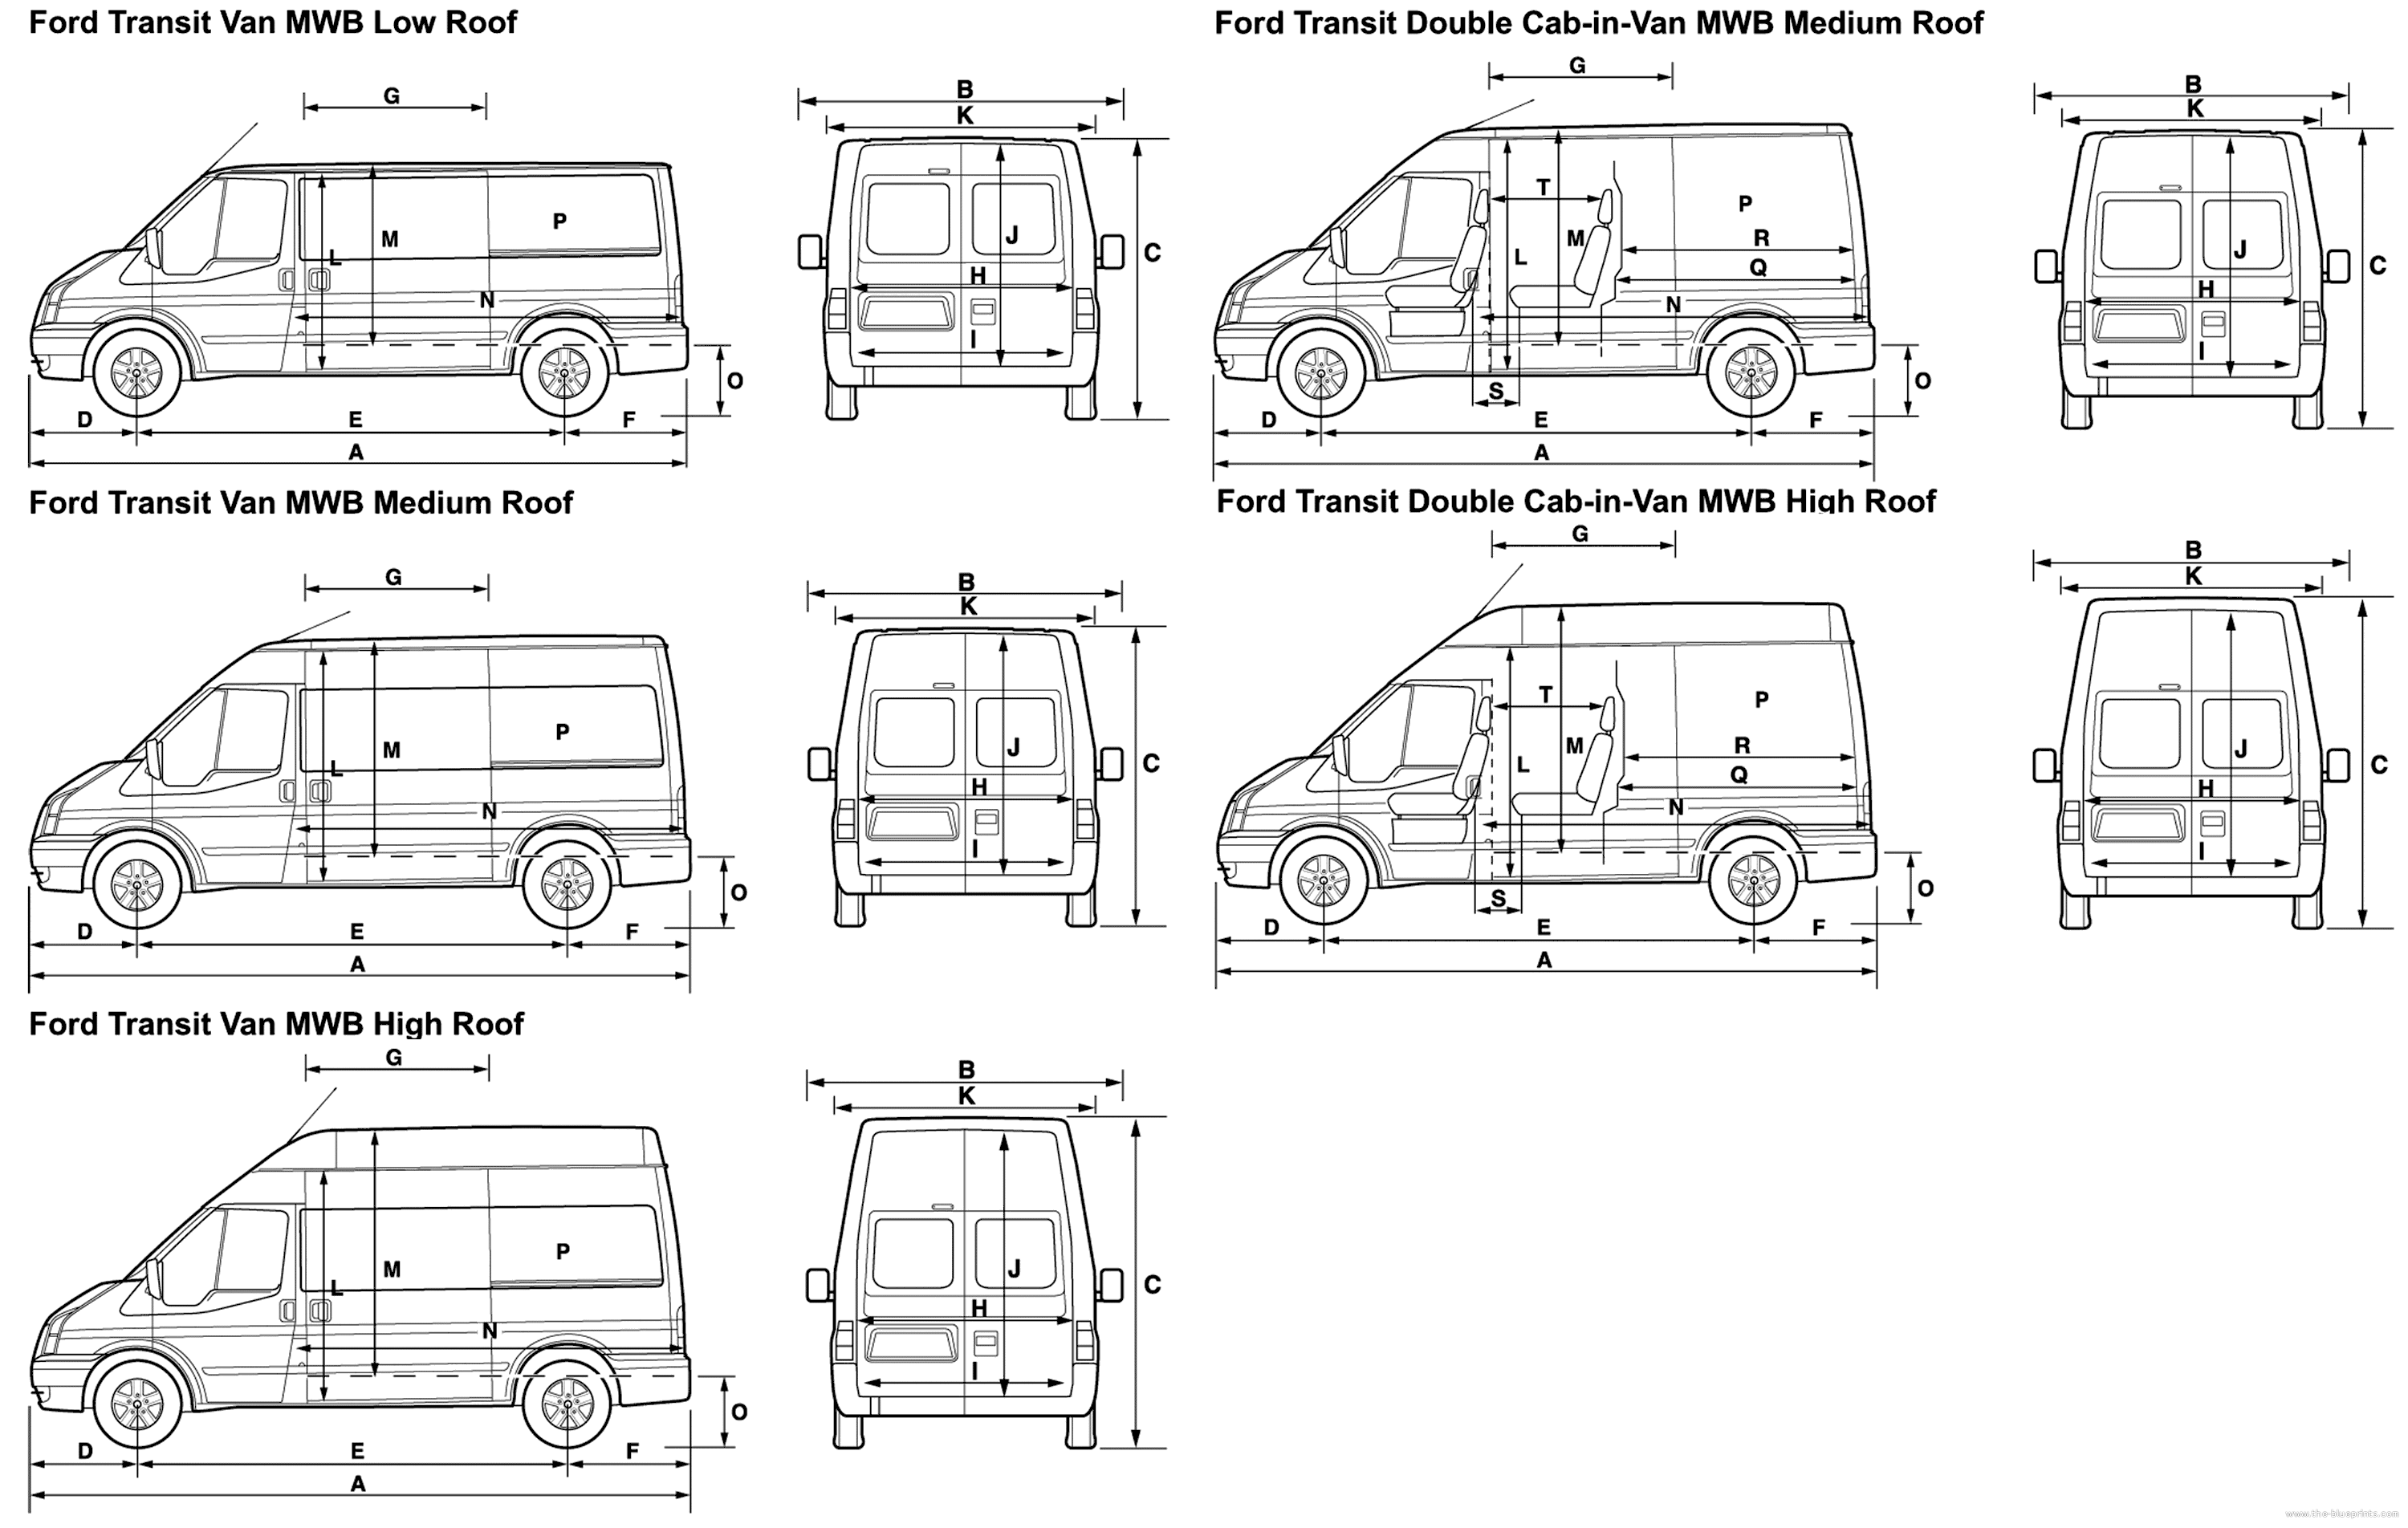 theblueprintscom-blueprints-gt-cars-gt-ford-gt-ford-transit-van-mwb_5a226.gif